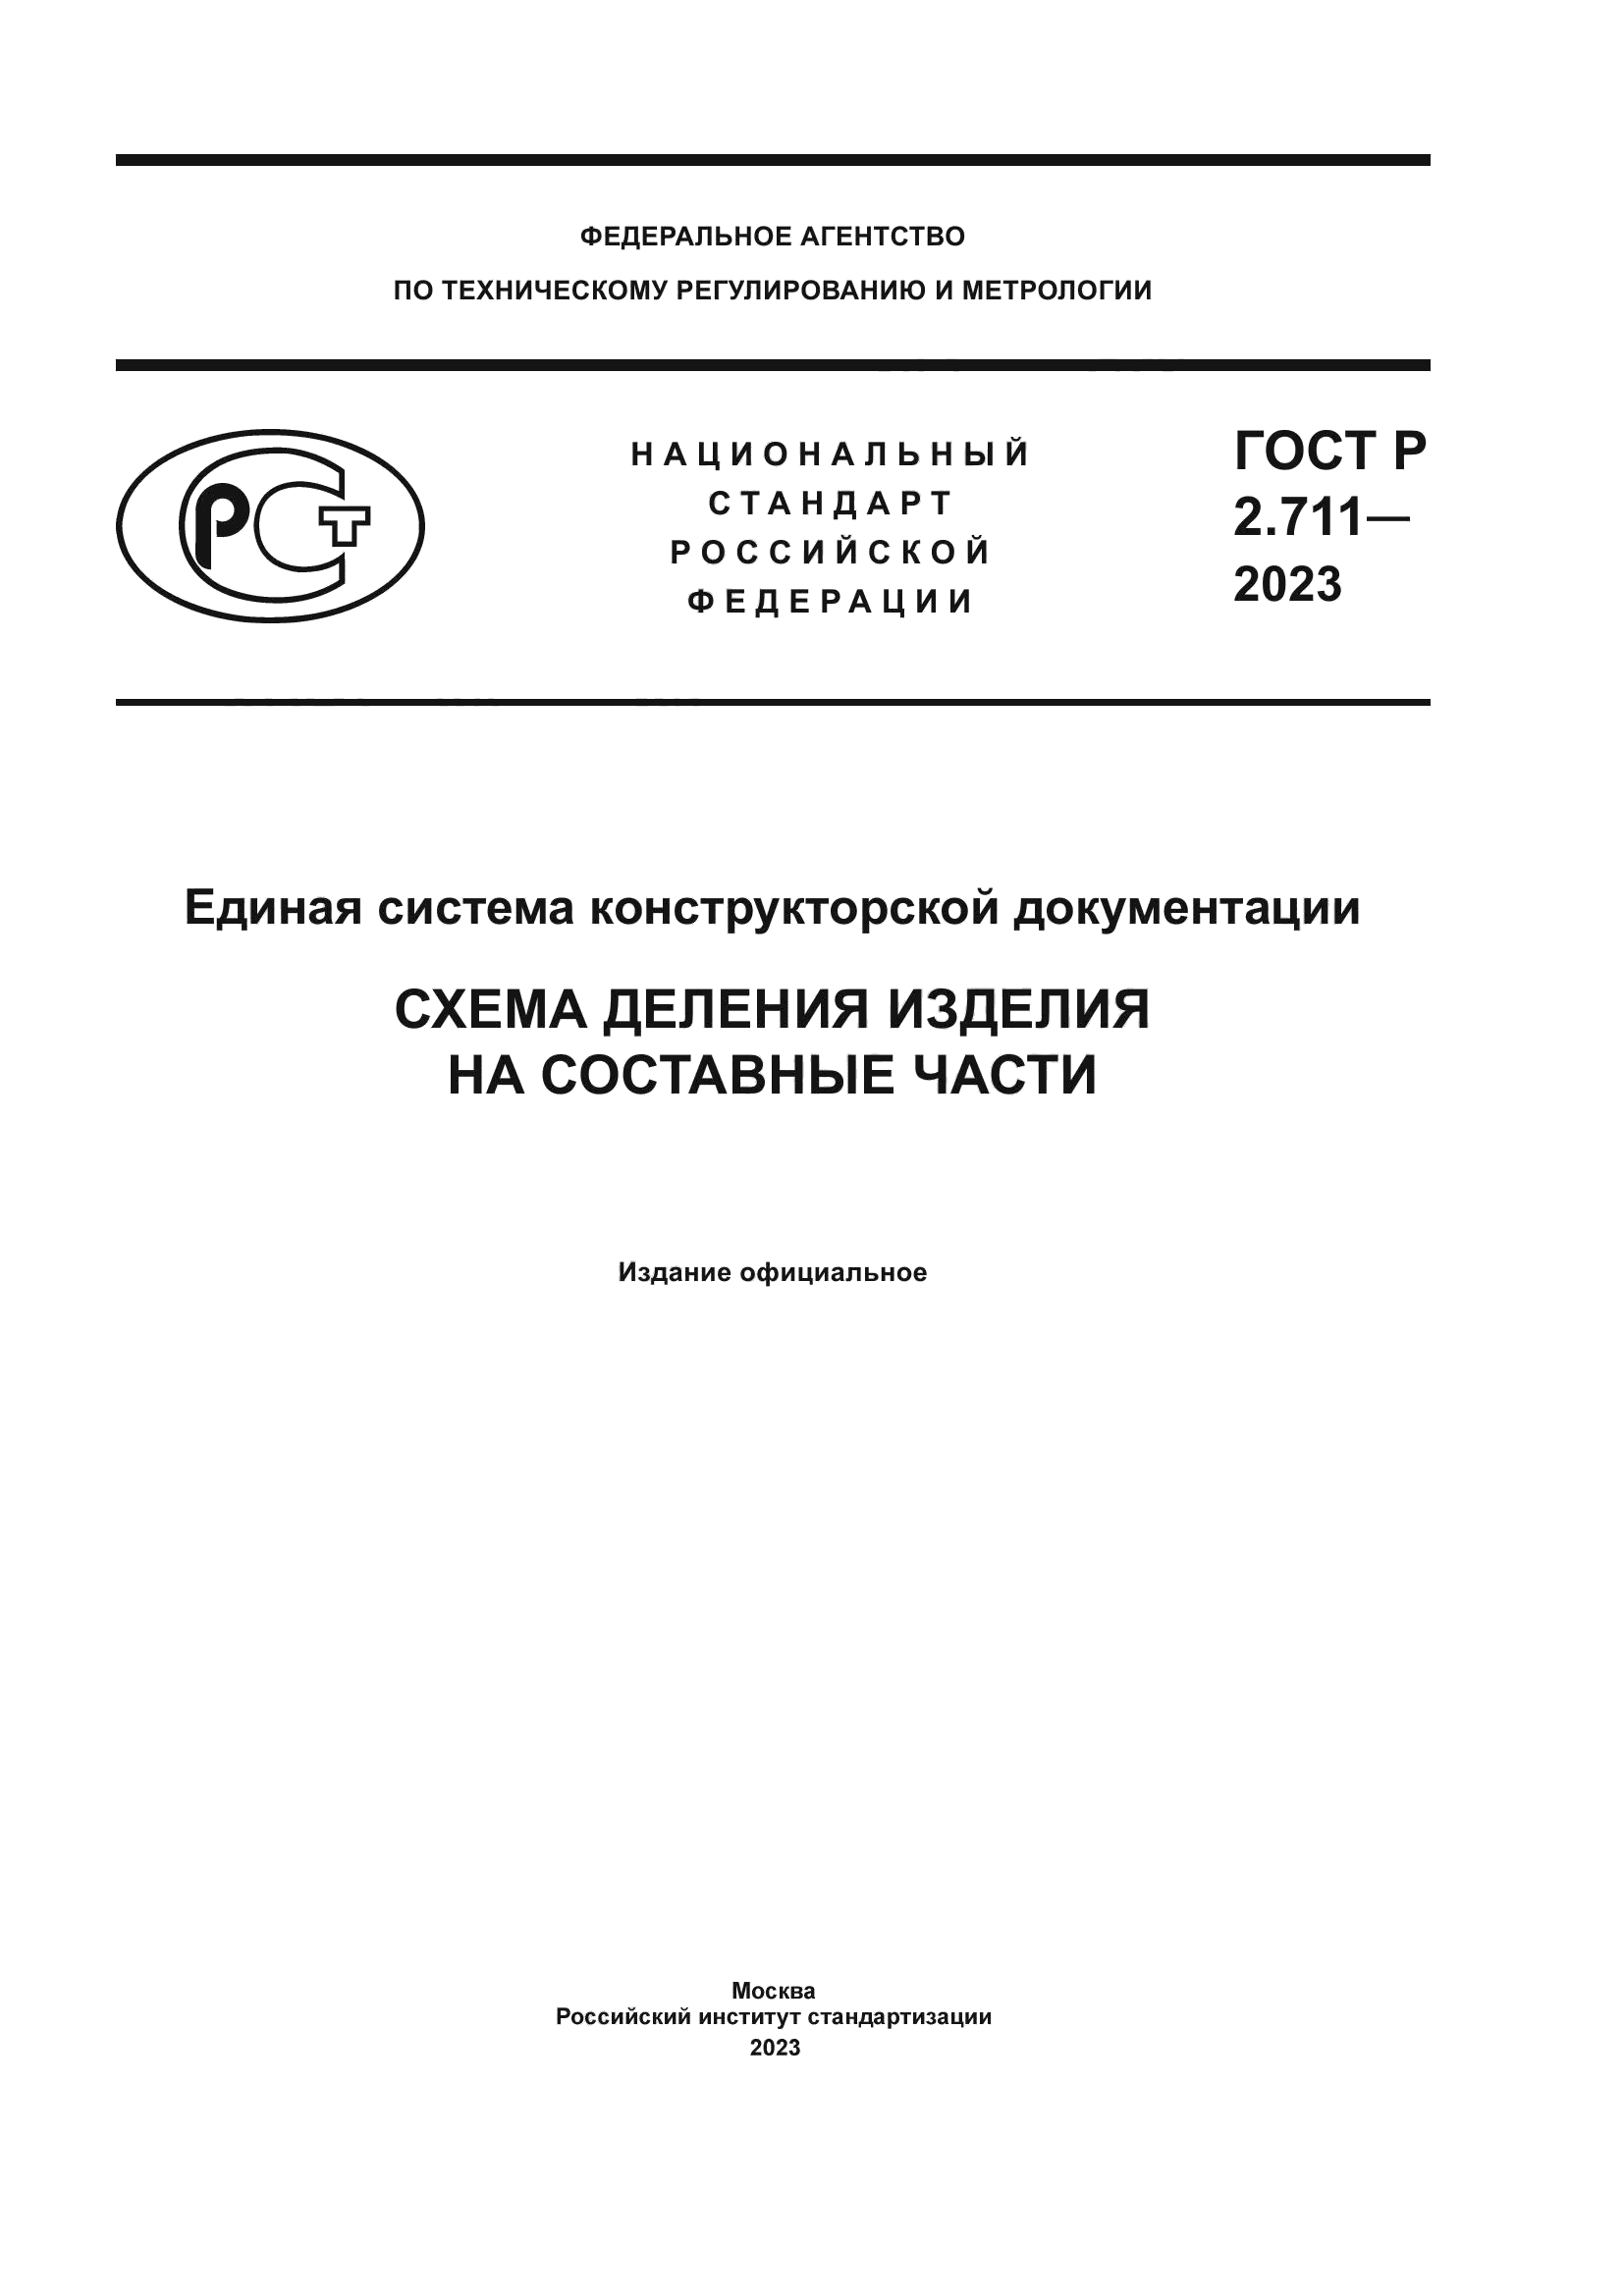 ГОСТ Р 2.711-2023